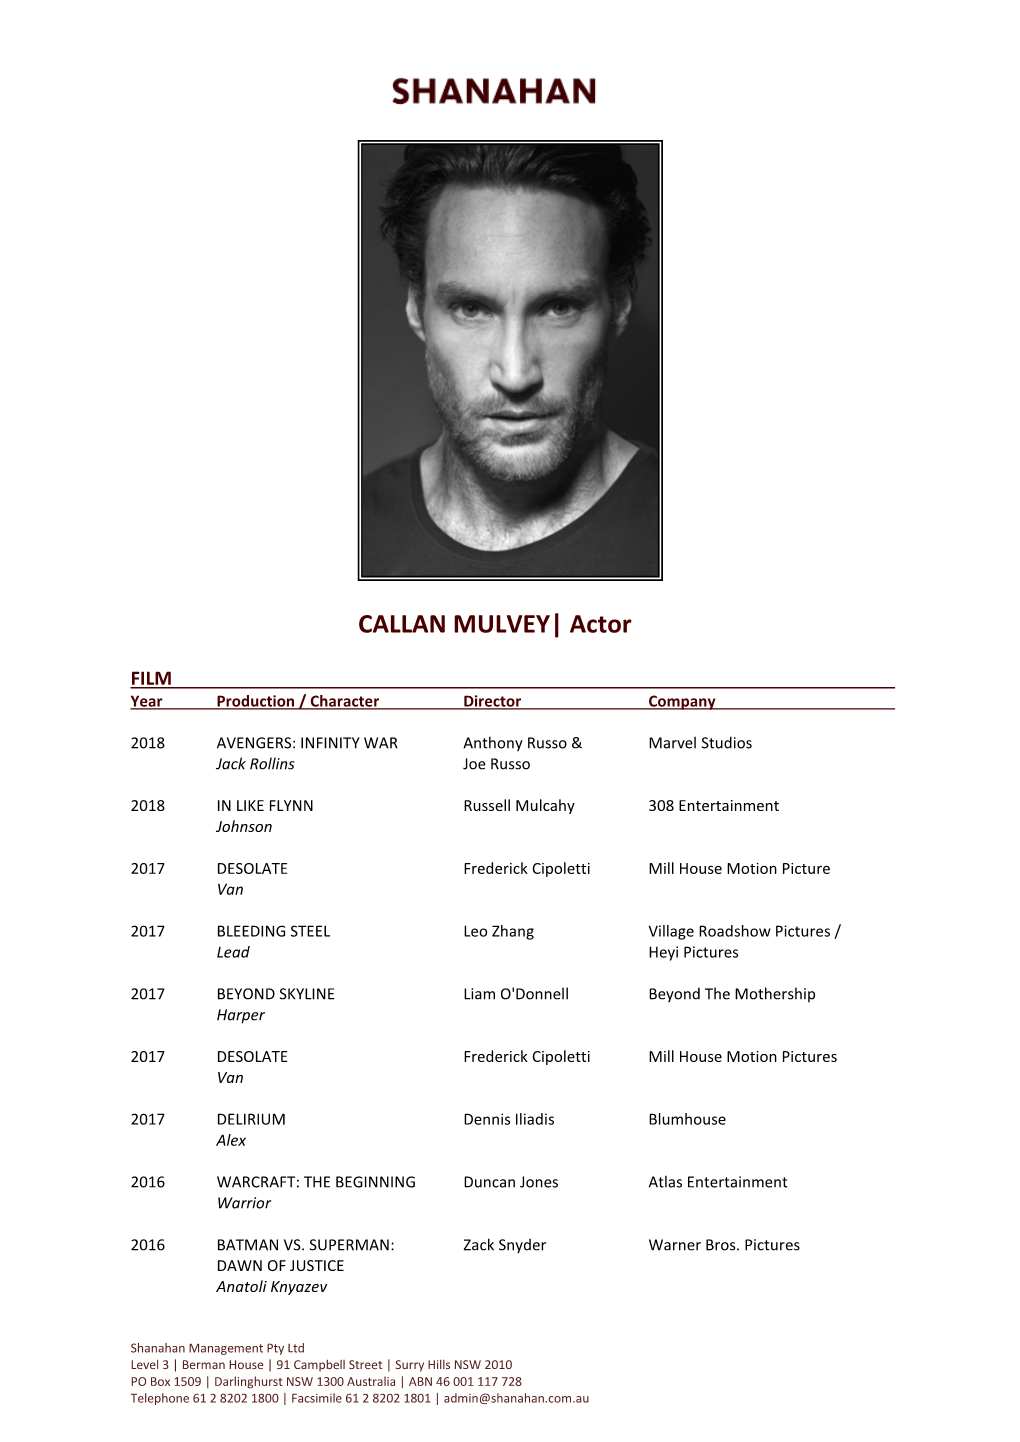 CALLAN MULVEY| Actor